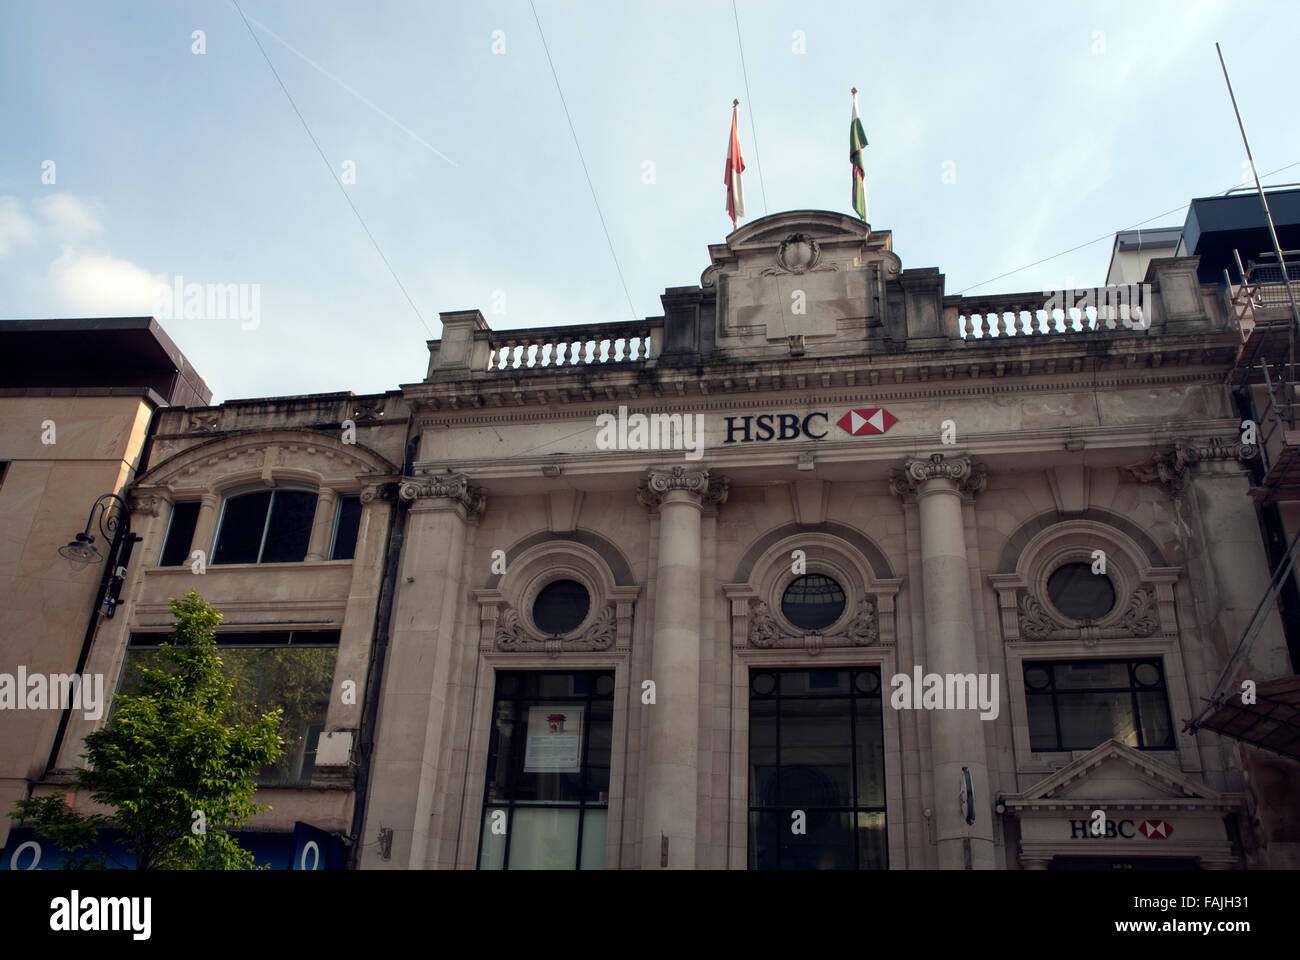 The HSBC Building Cardiff, Wales UK Stock Photo